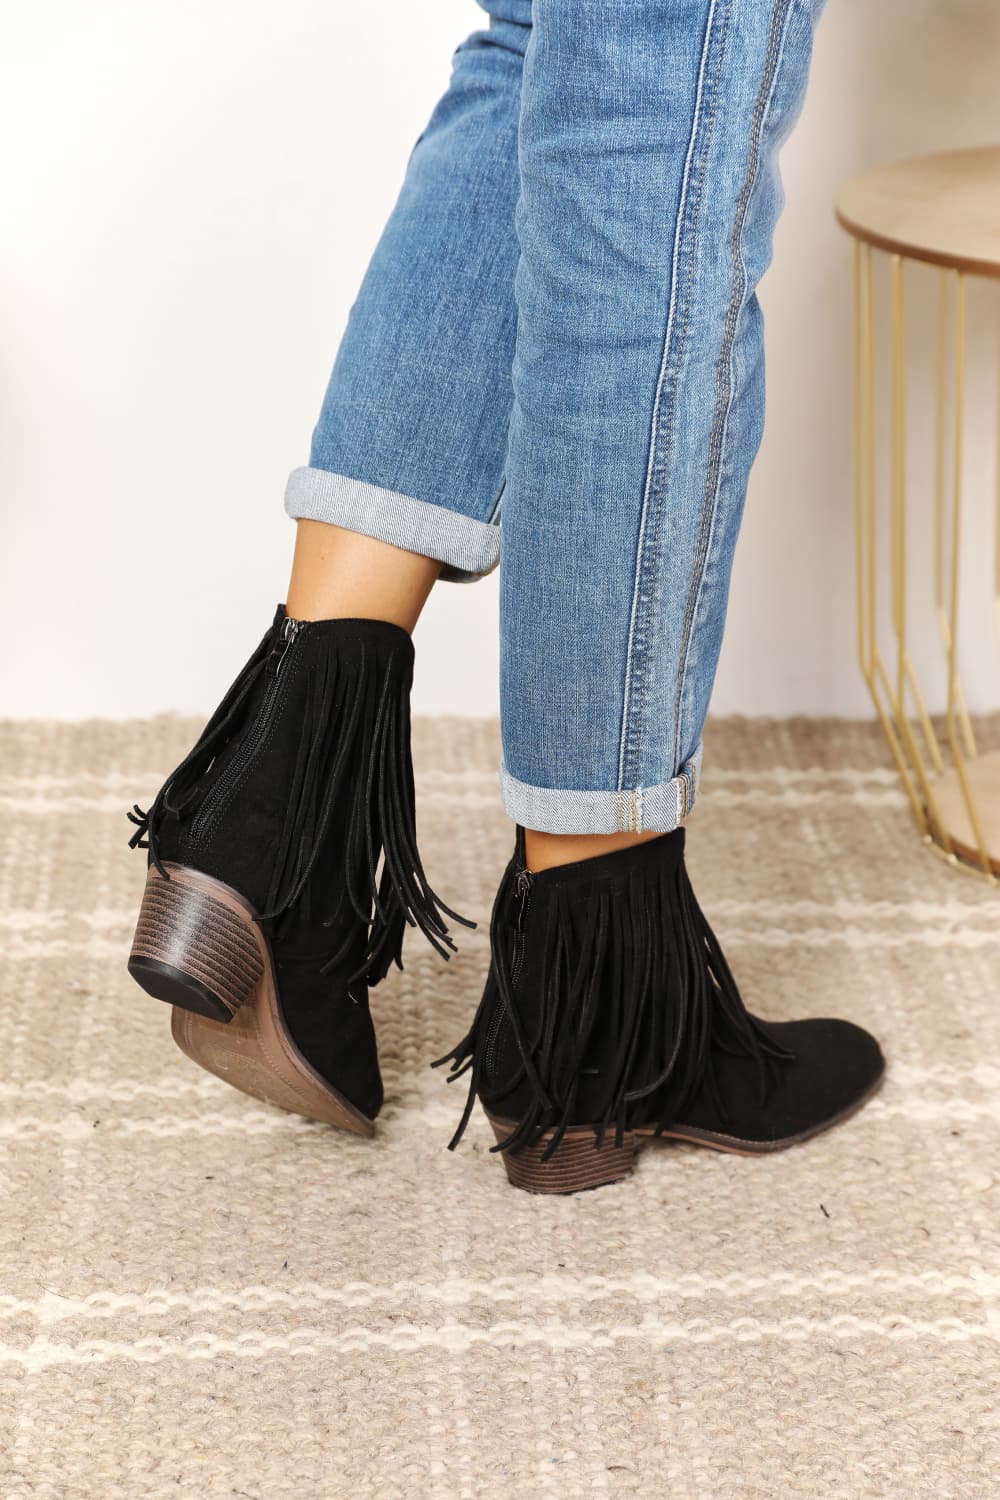 Legend Fringe Cowboy Western Cowgirl Black Ankle Bootie Heeled Boots